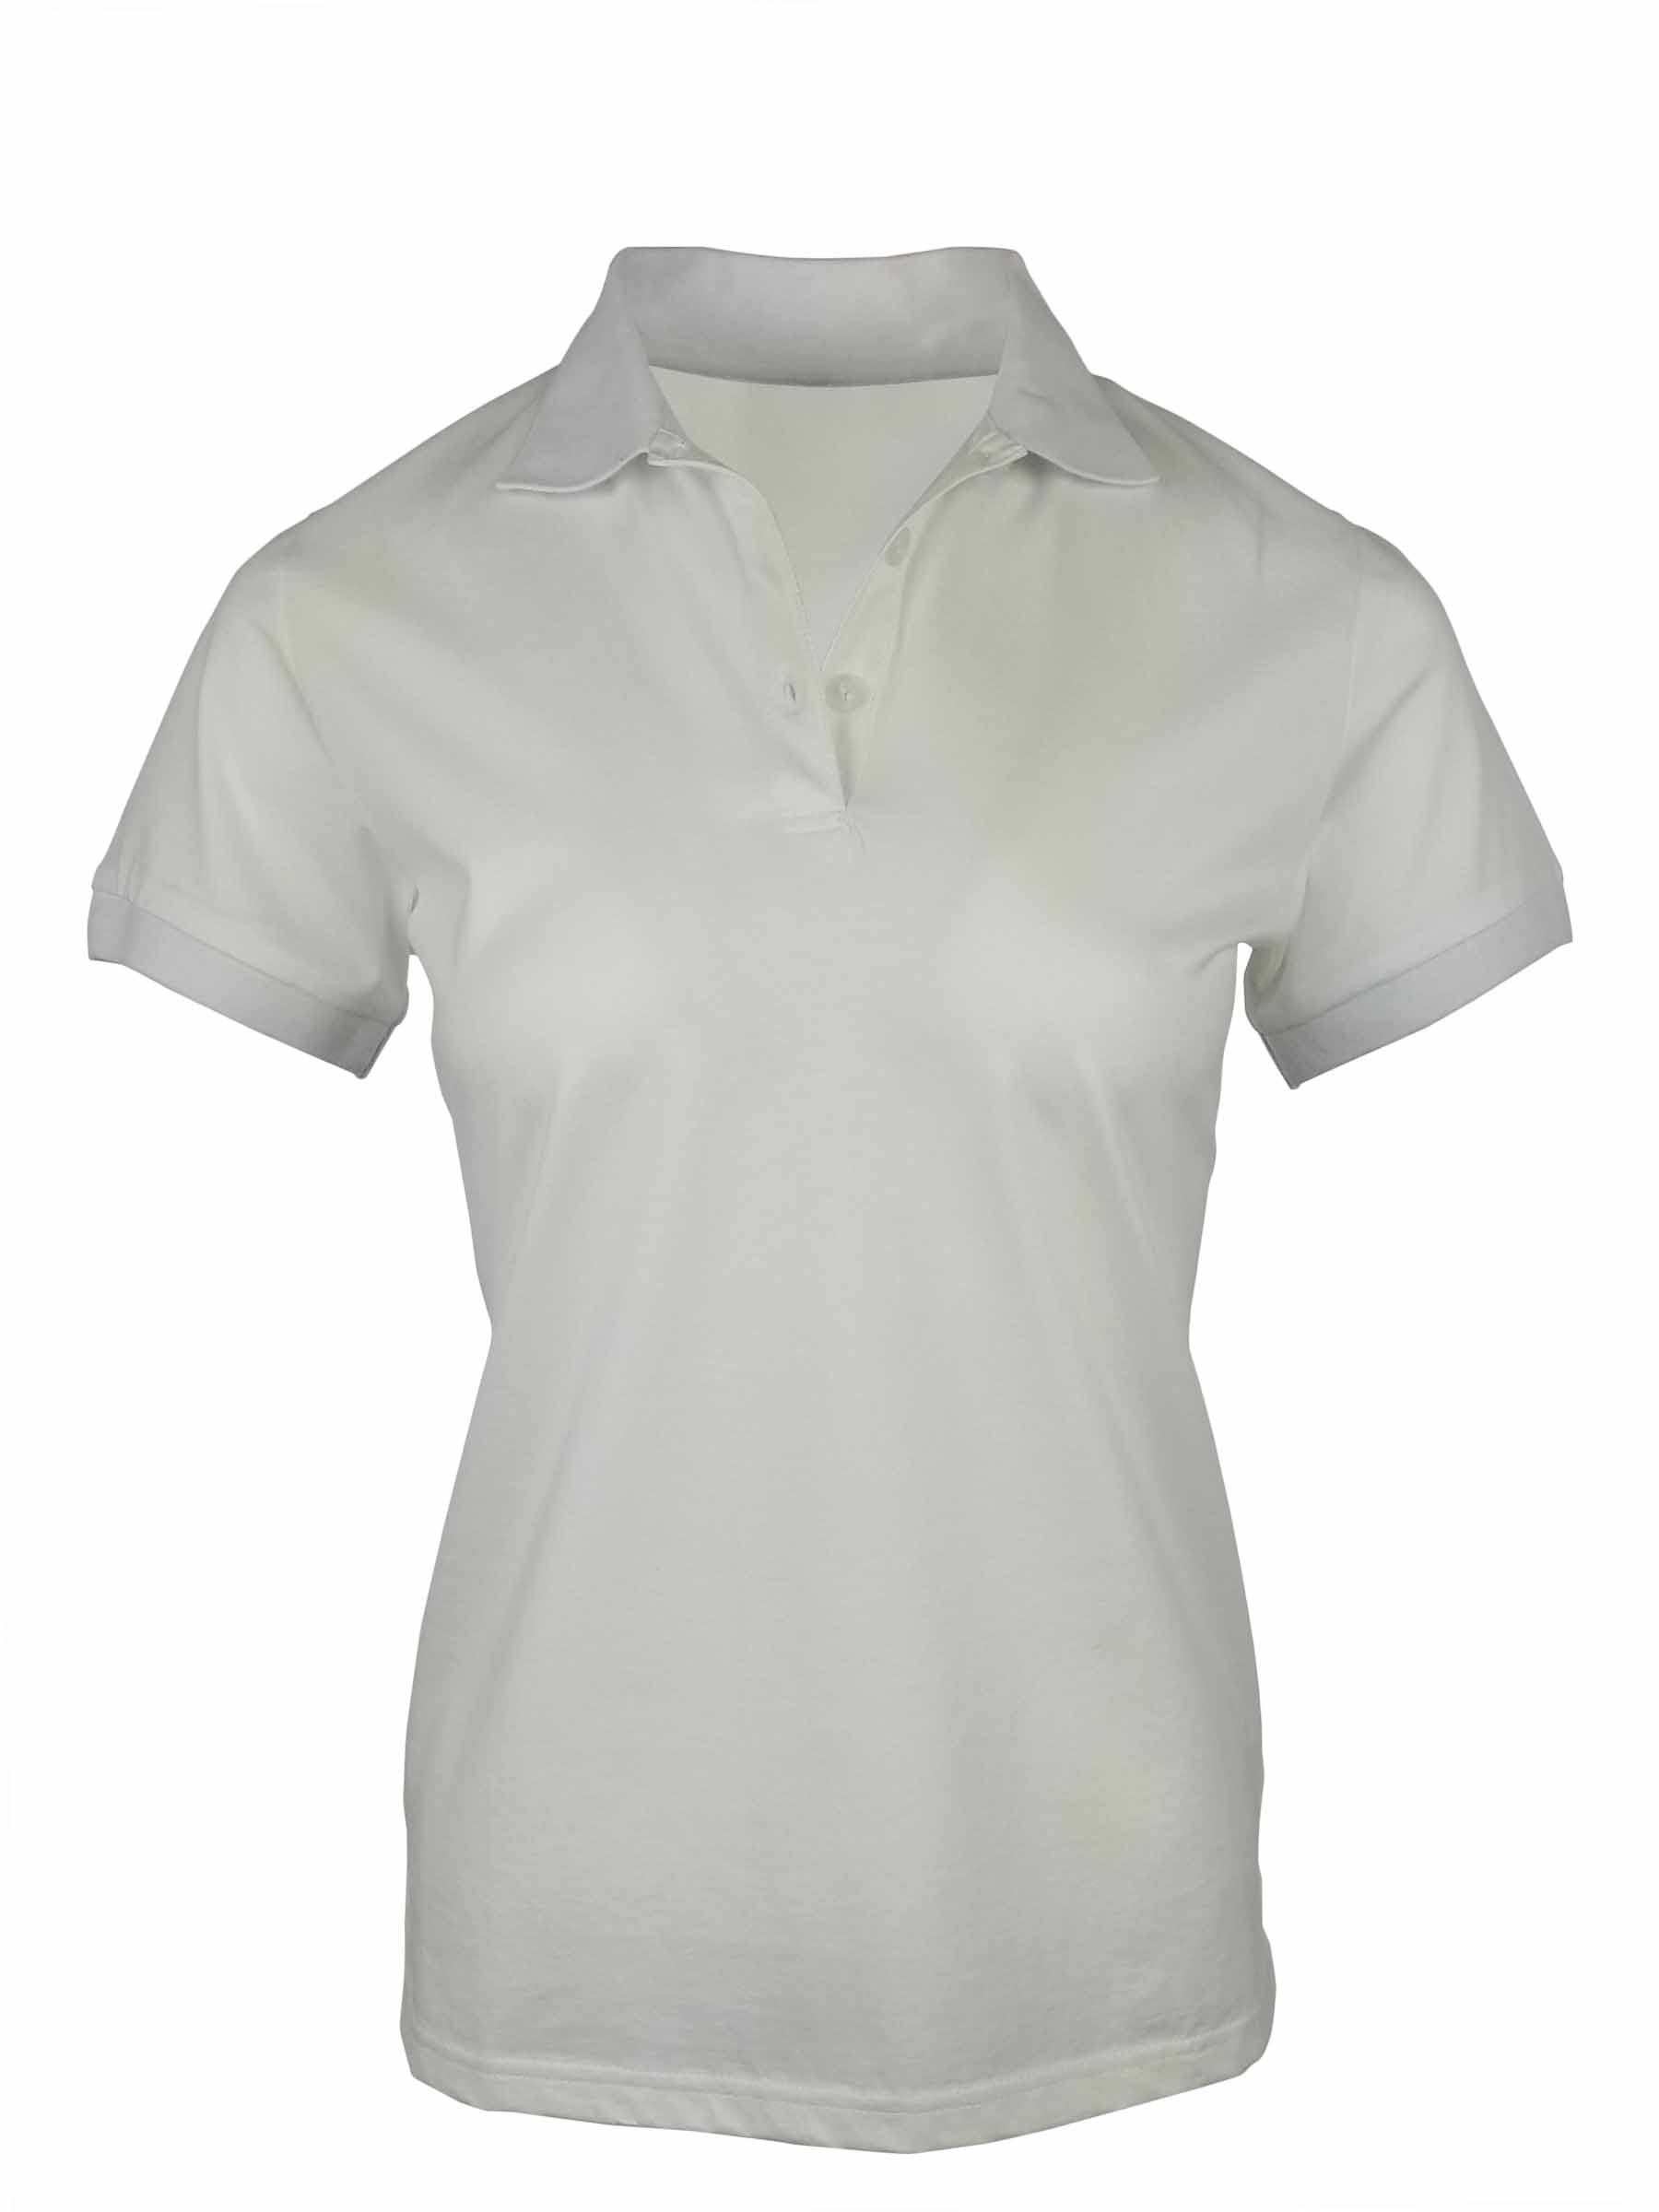 Women's All Occasion Mercerized Polo - White - Uniform Edit